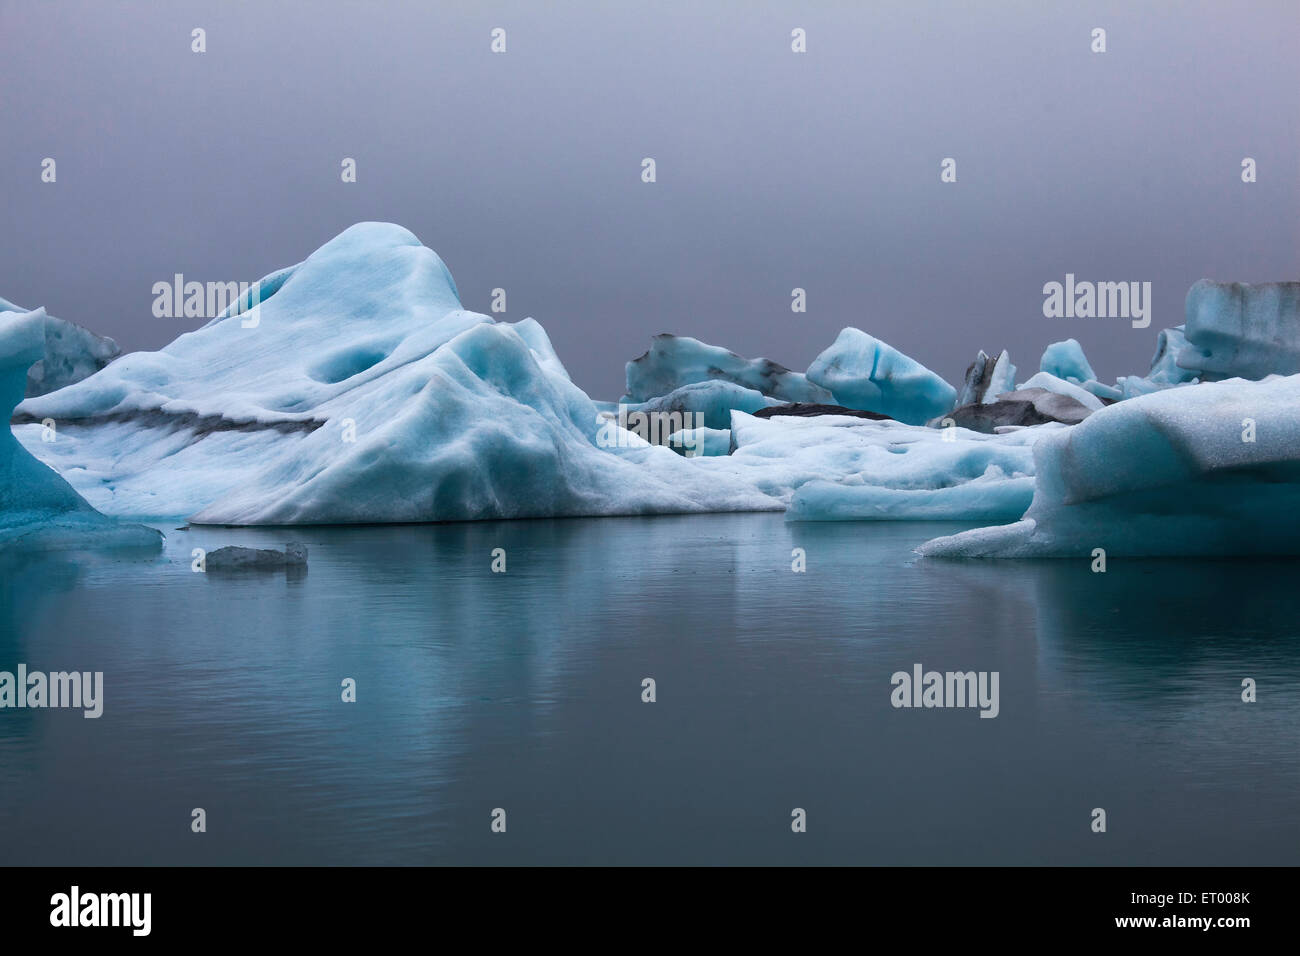 Blue icebergs in calm water, Jokulsarlon, Iceland Stock Photo